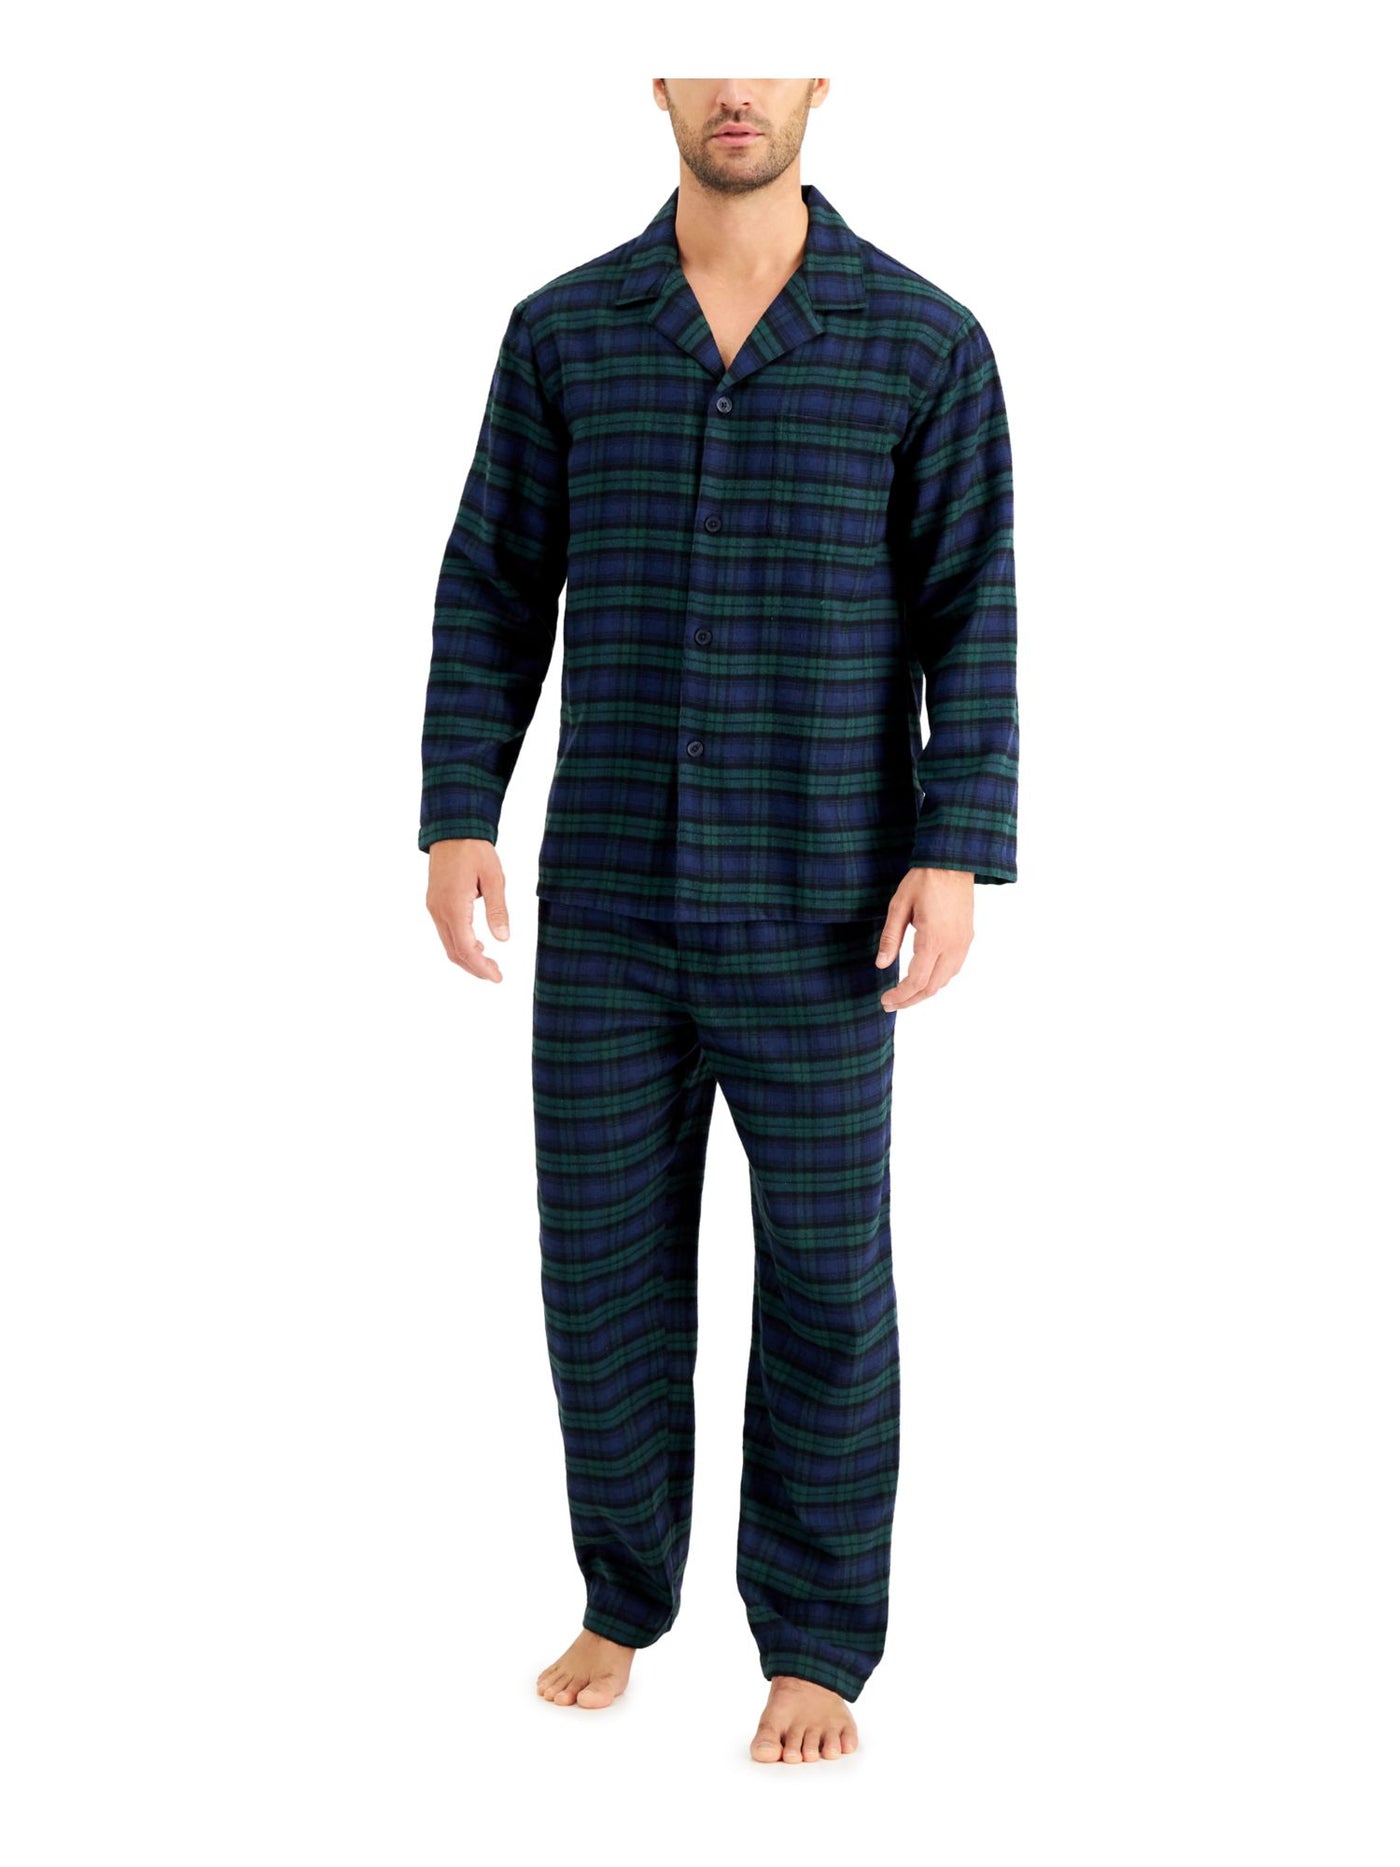 CLUBROOM Mens Green Plaid Drawstring Button Up Top Straight leg Pants Pajamas L